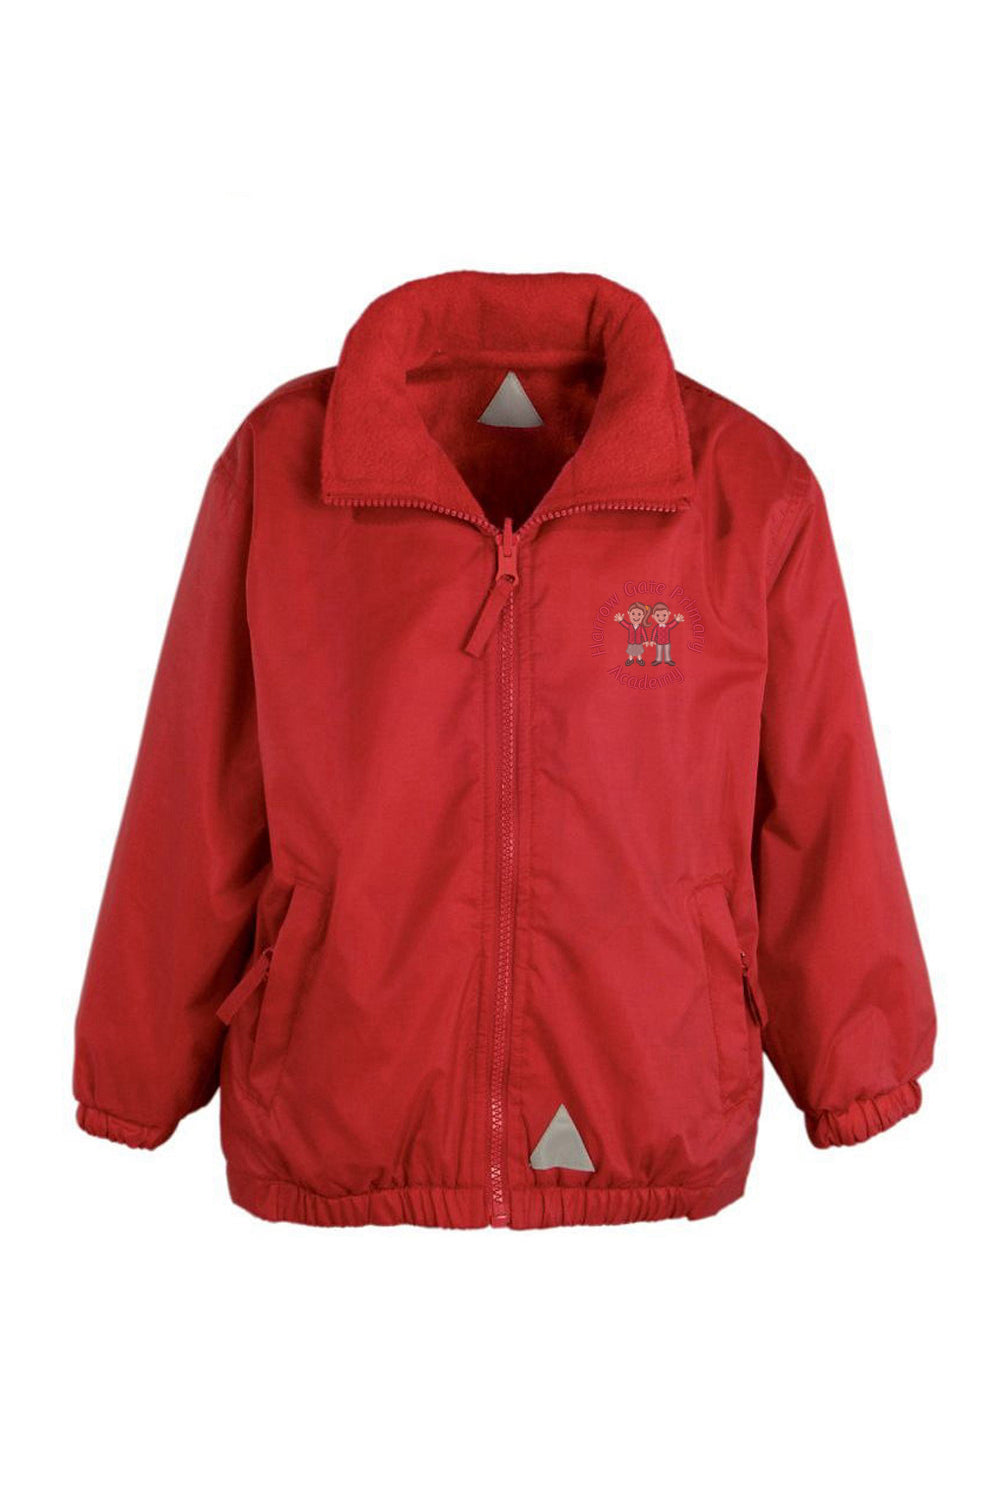 Harrow Gate Red Shower Jacket